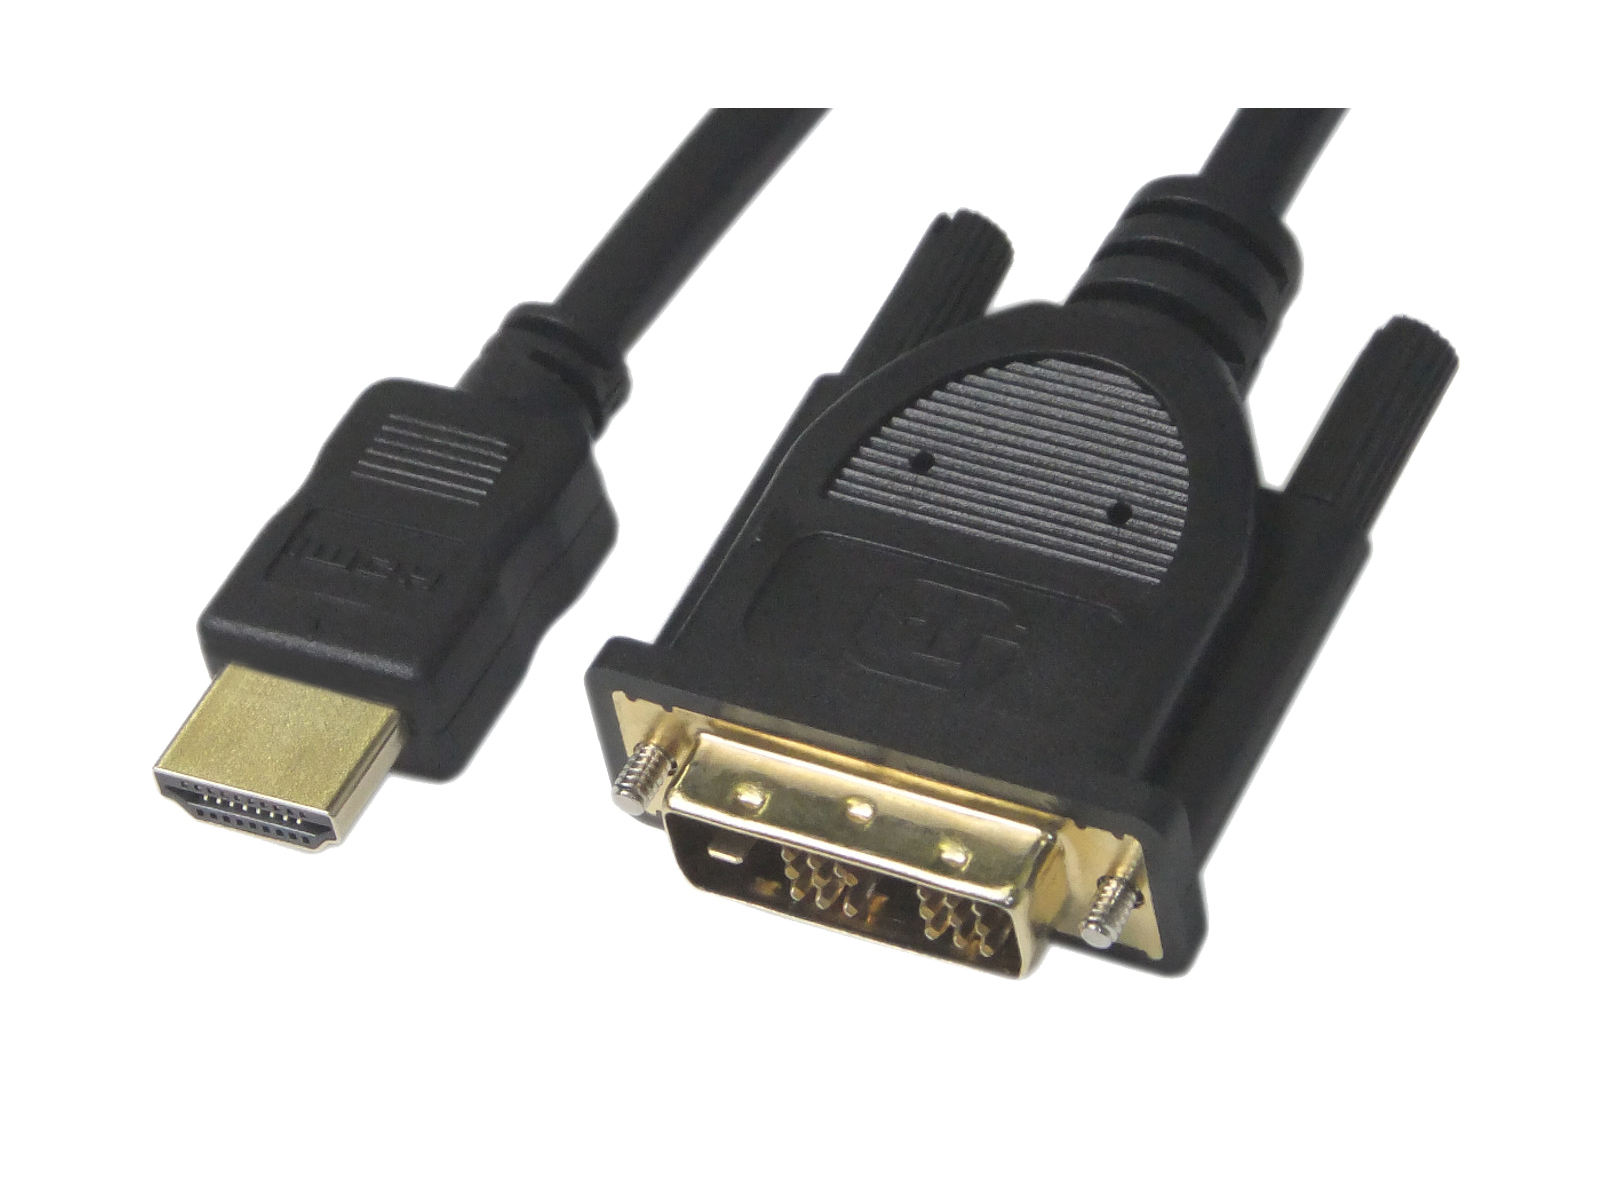 人気上昇中 vodaview 限定特価 HDMI-DVI 変換ケーブル1.0m DVI⇔HDMI メール便 〔黒〕〔全結線仕様〕 両方向対応 送料無料